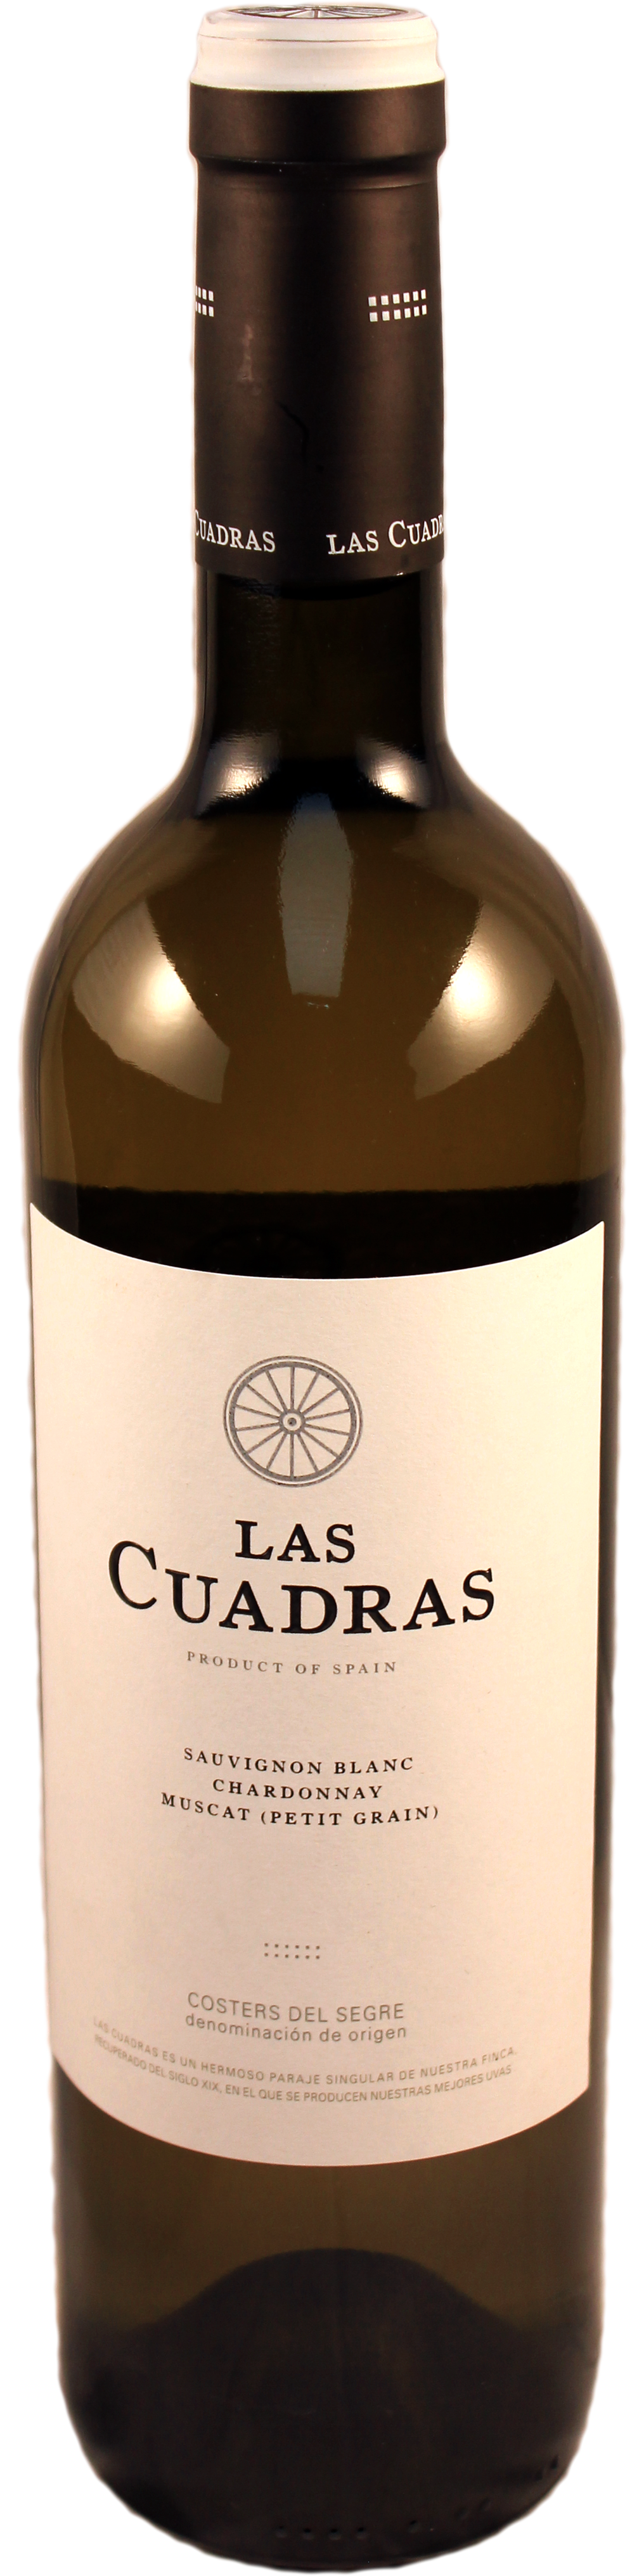 Bottle shot of 2013 Las Cuadras Blanco